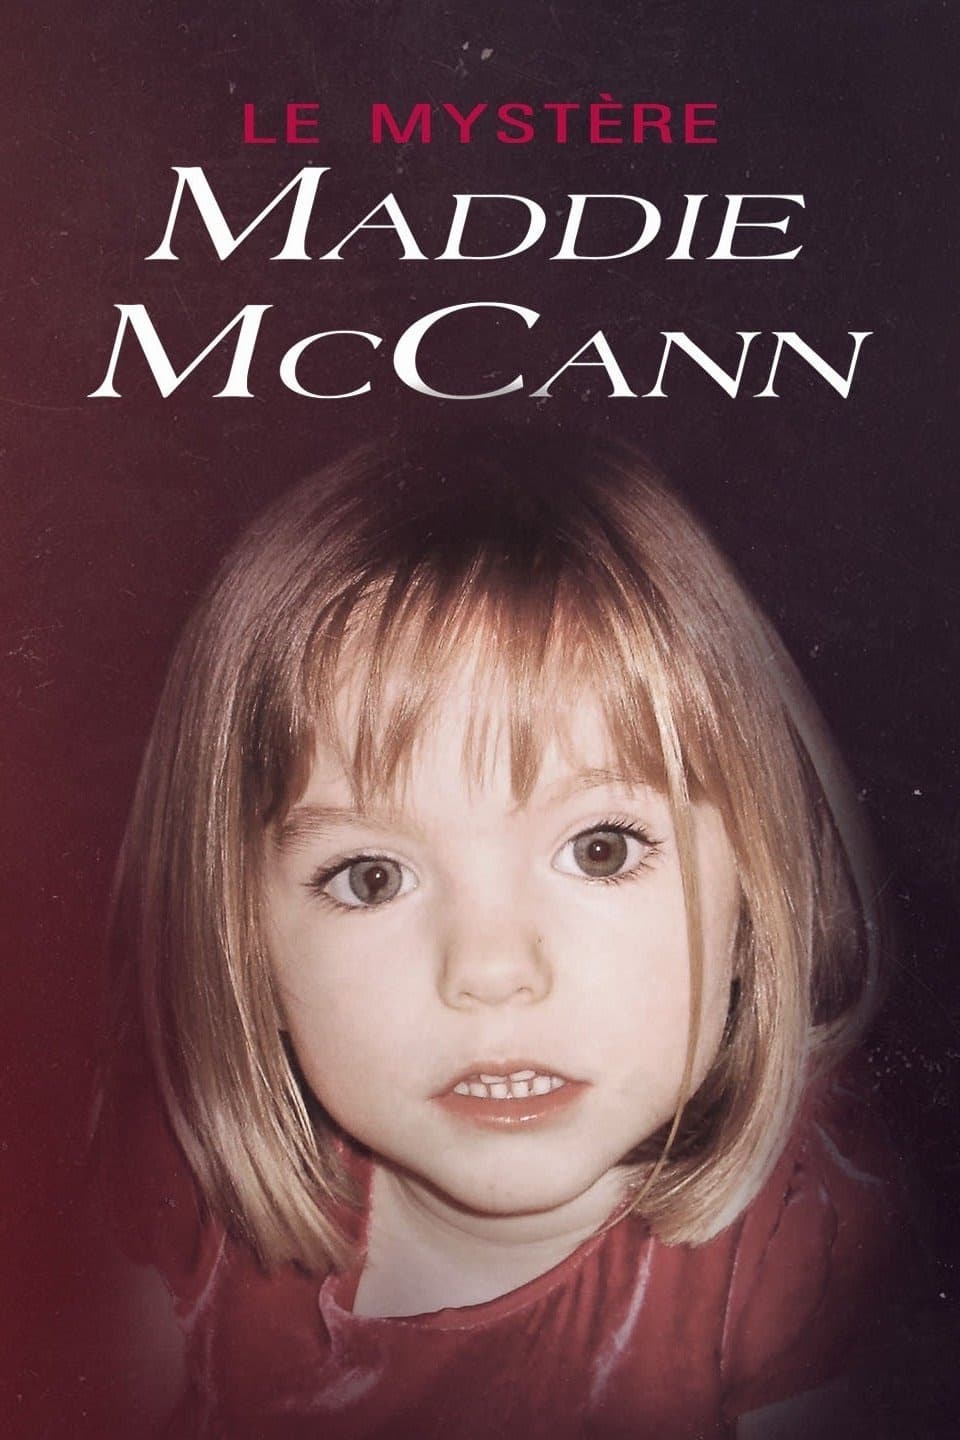 Le mystère Maddie McCann